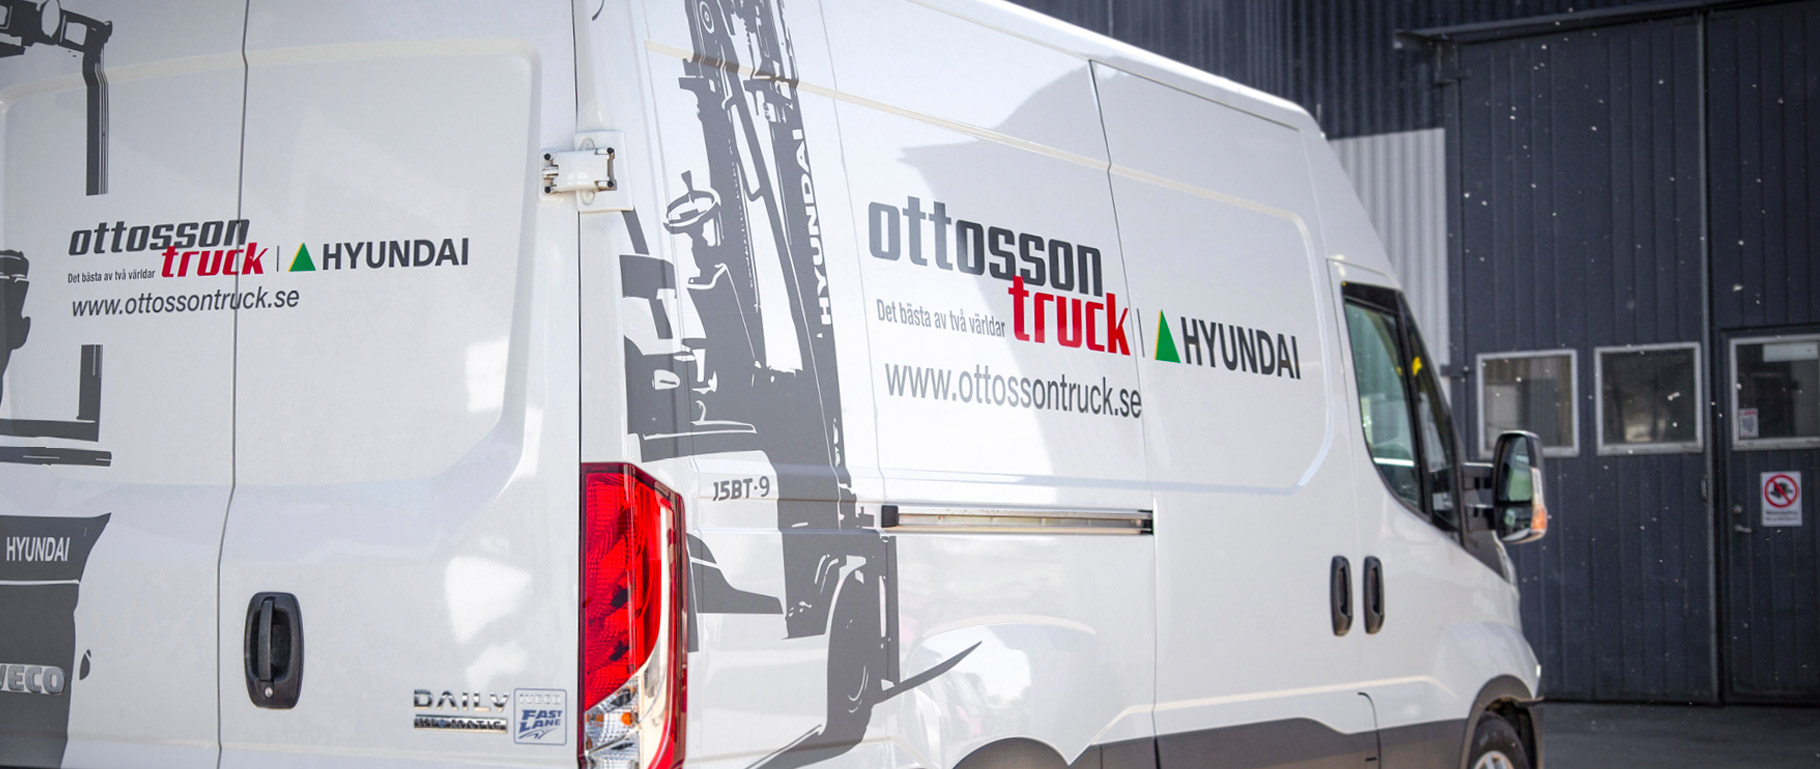 Truckservice - Ottosson Truck